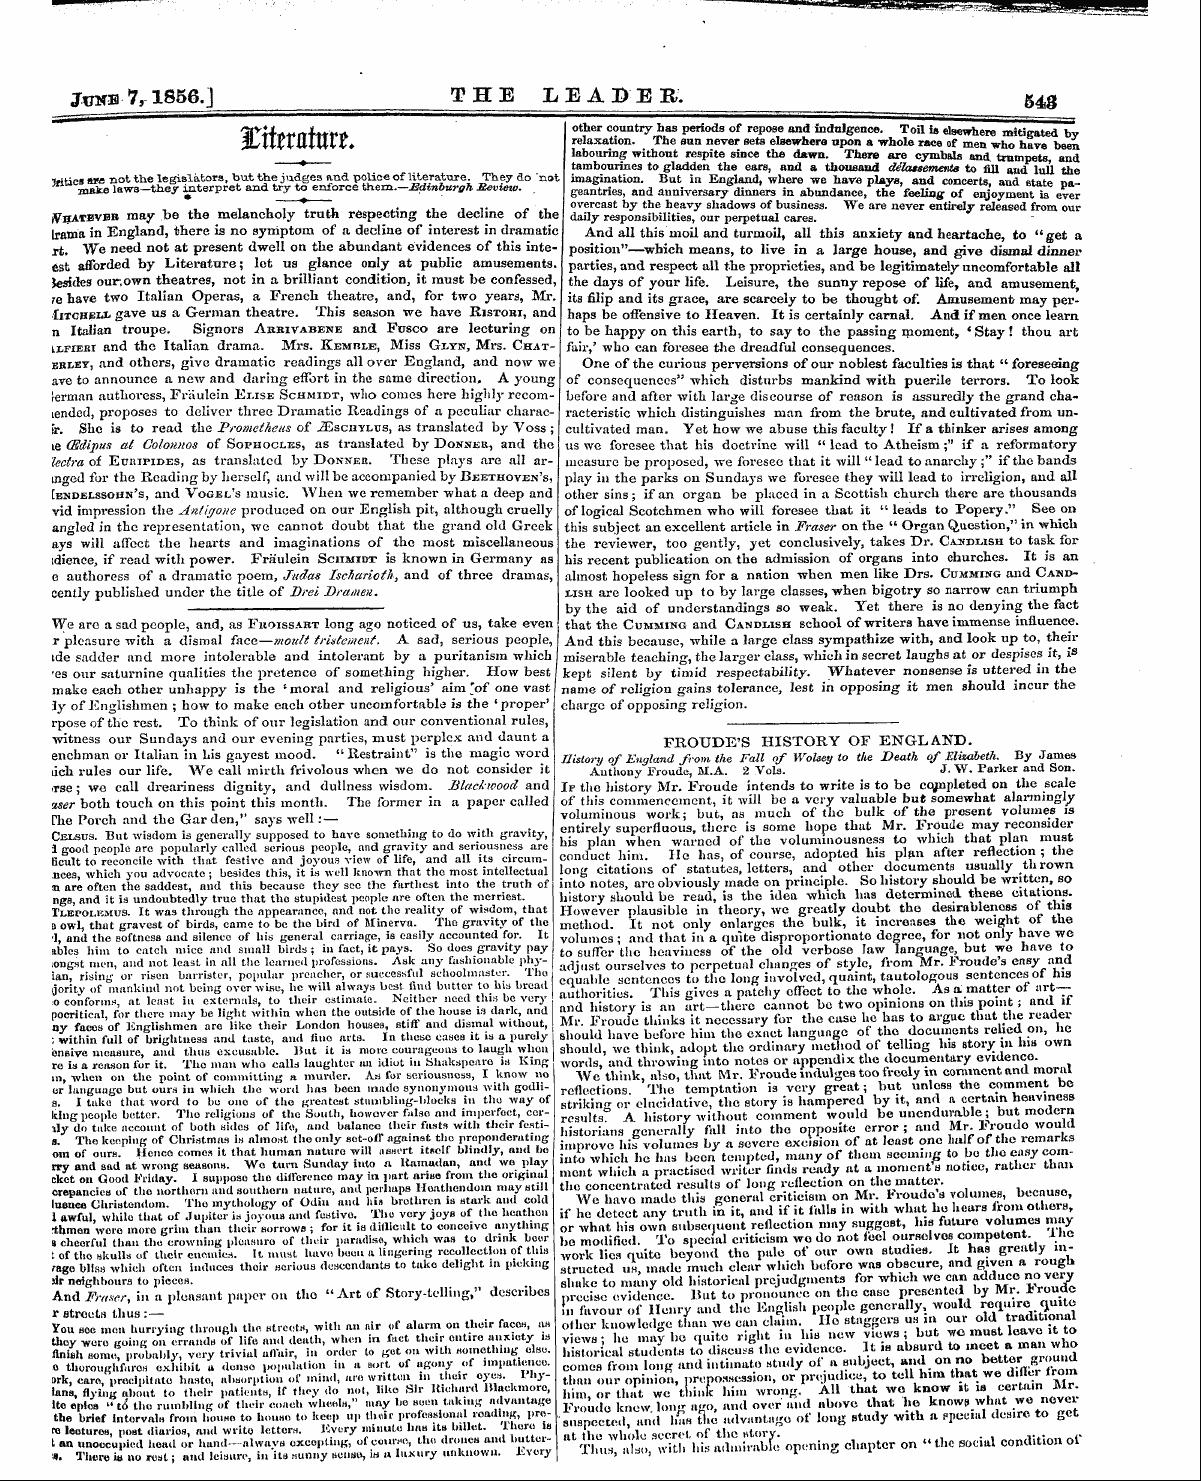 Leader (1850-1860): jS F Y, 1st edition - It-Hwrifm 4 * %,Uuuluxk*